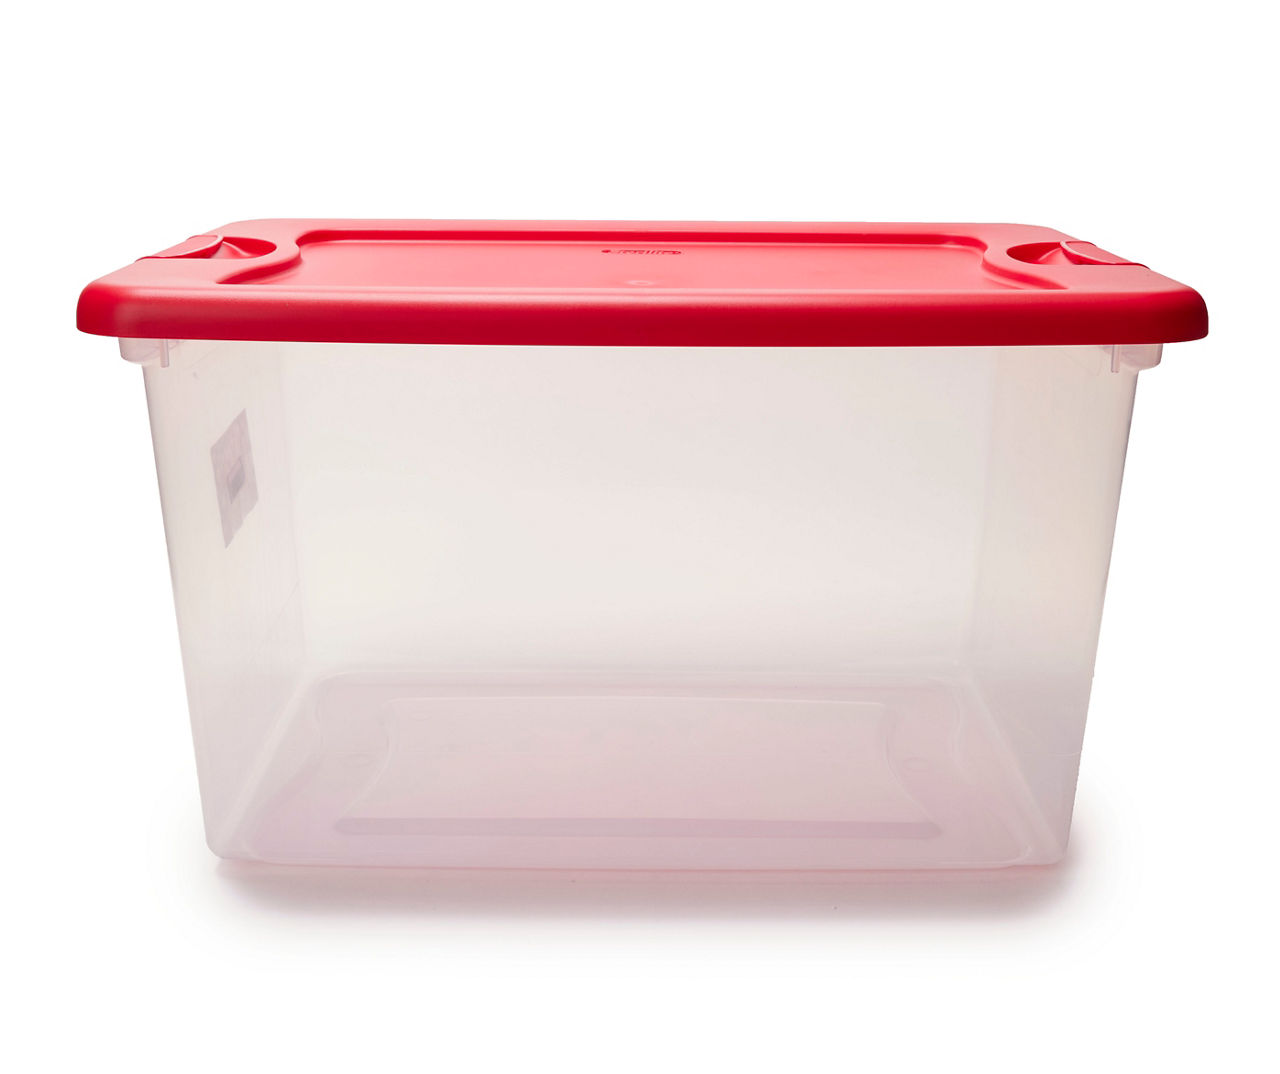 Plastic Seed Storage Box, Seed Storage Organizer with 64